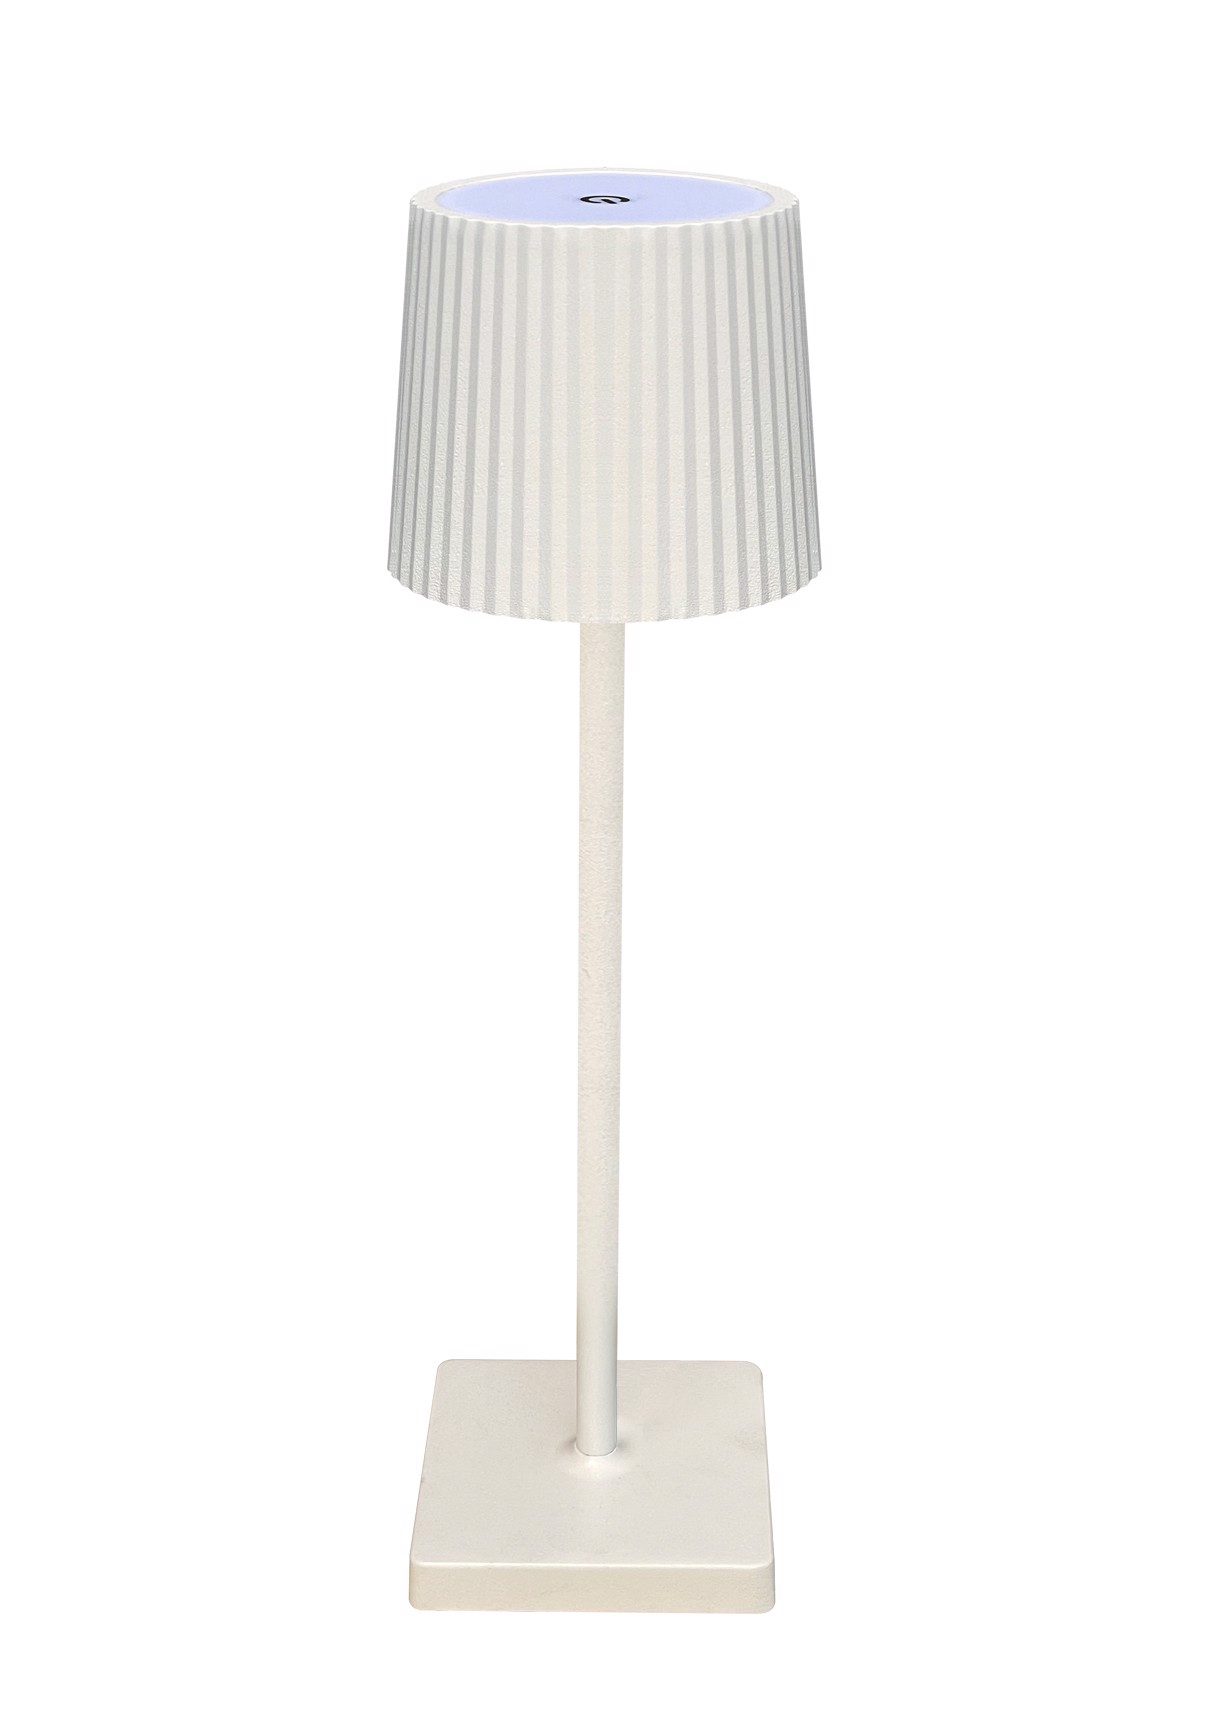 TWEED TW109TRT lampada da tavolo ricaricabile usb LED Grigio, Illuminazione in Offerta su Stay On